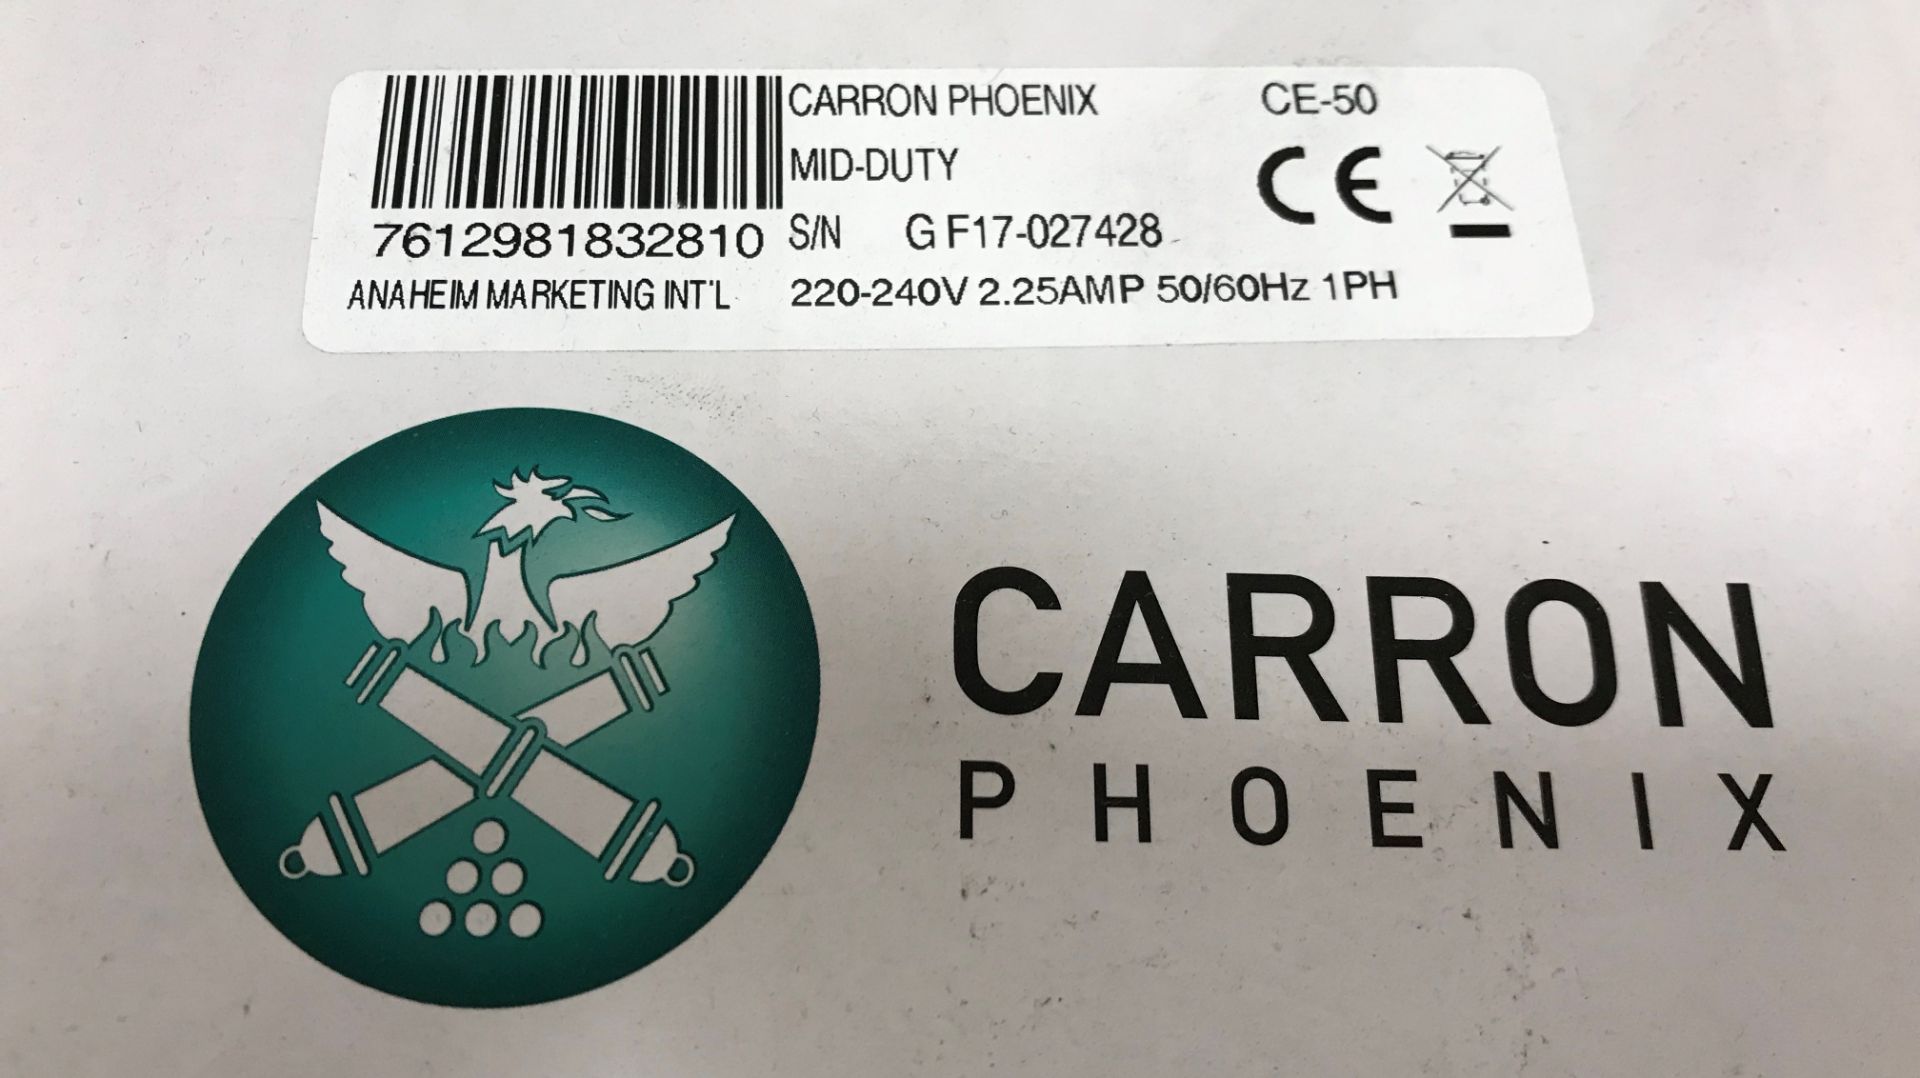 Carron Phoenix Carronade CE-50 Food Waste Disposal Unit - Black - RRP£159 - Image 2 of 4